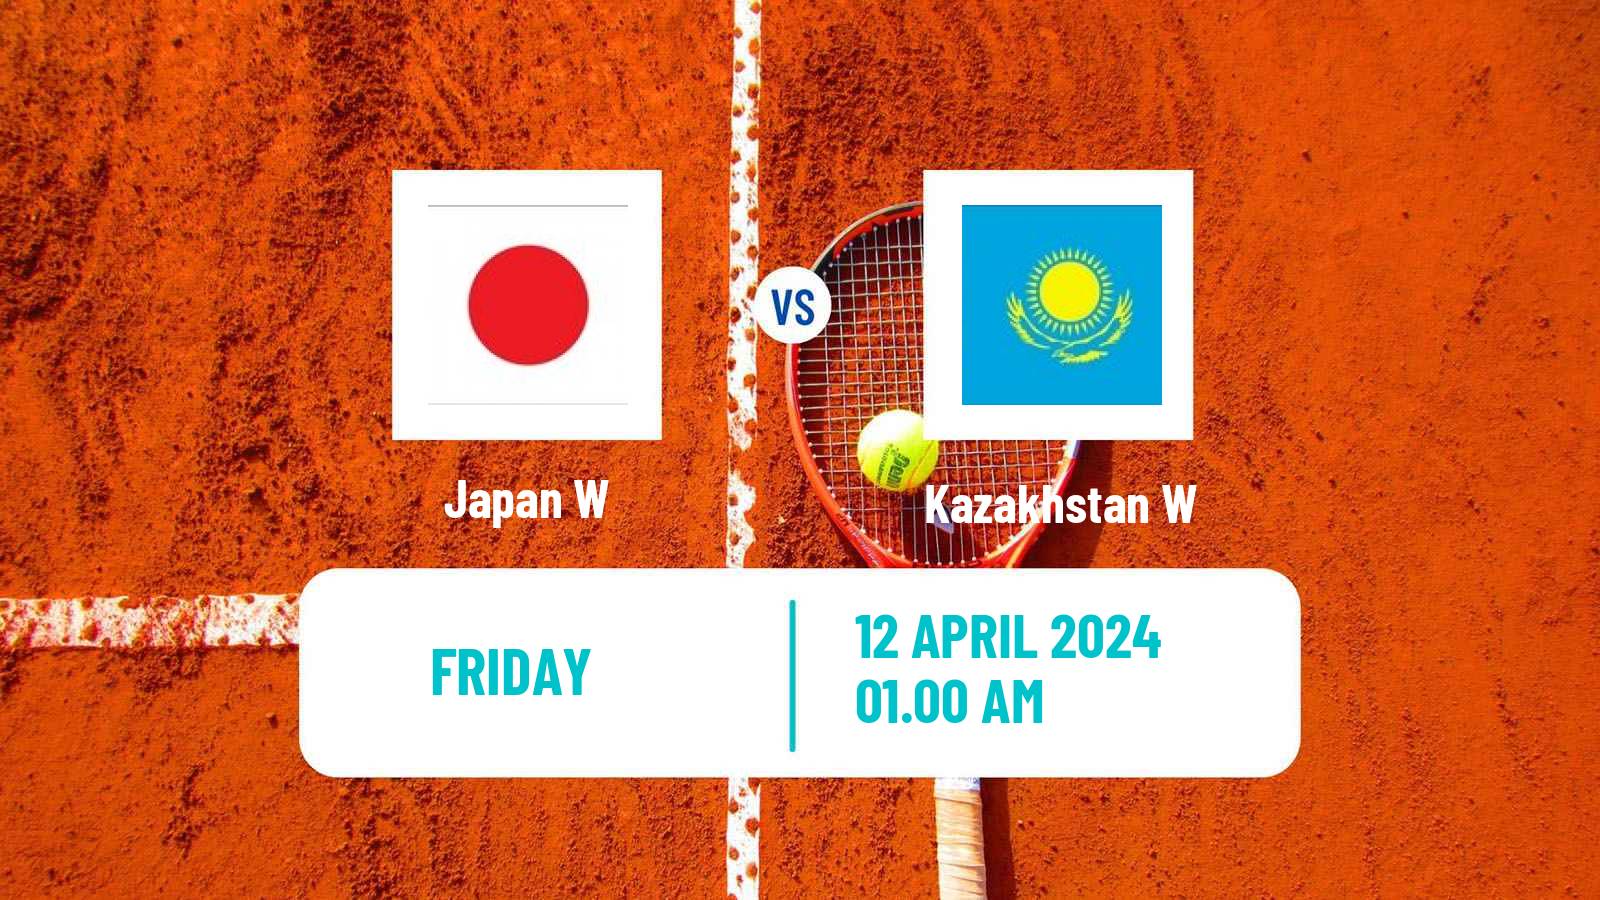 Tennis WTA Billie Jean King Cup World Group Teams Japan W - Kazakhstan W